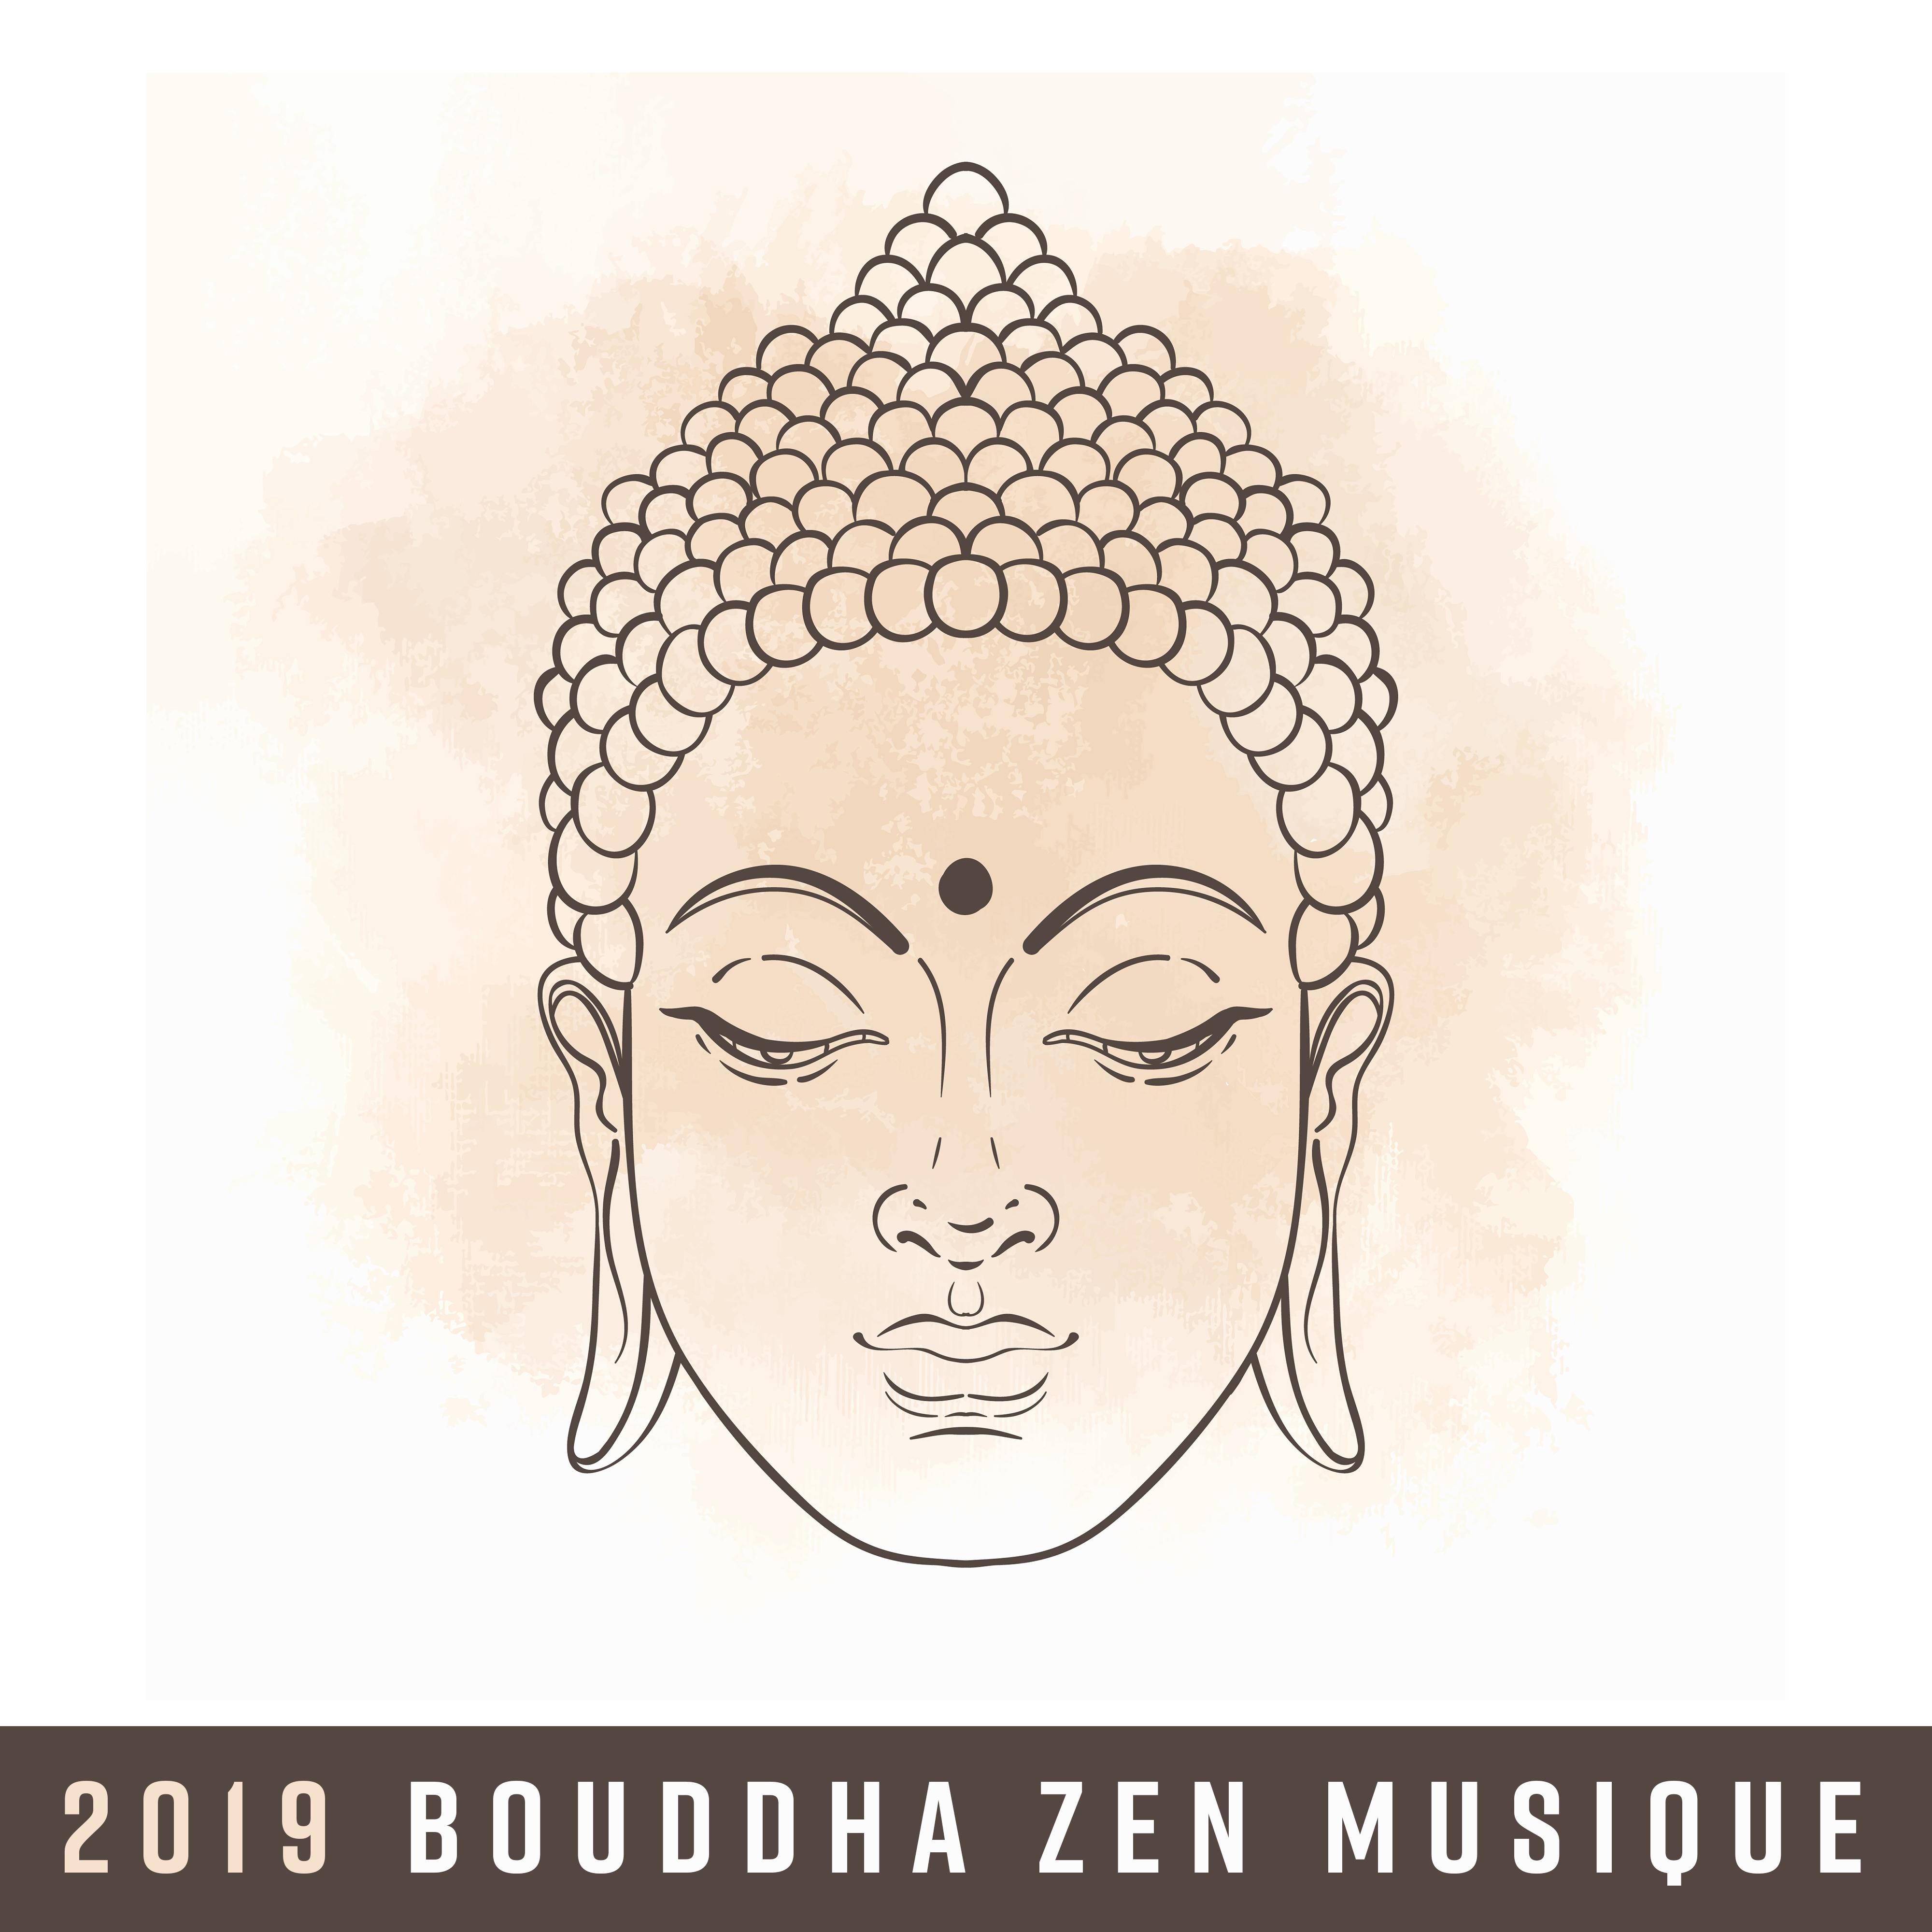 2019 Bouddha zen musique – Méditation profonde, Bar, Lounge, Relaxation, Profonde harmonie, Musique calme, Bouddha tibétain, Yoga